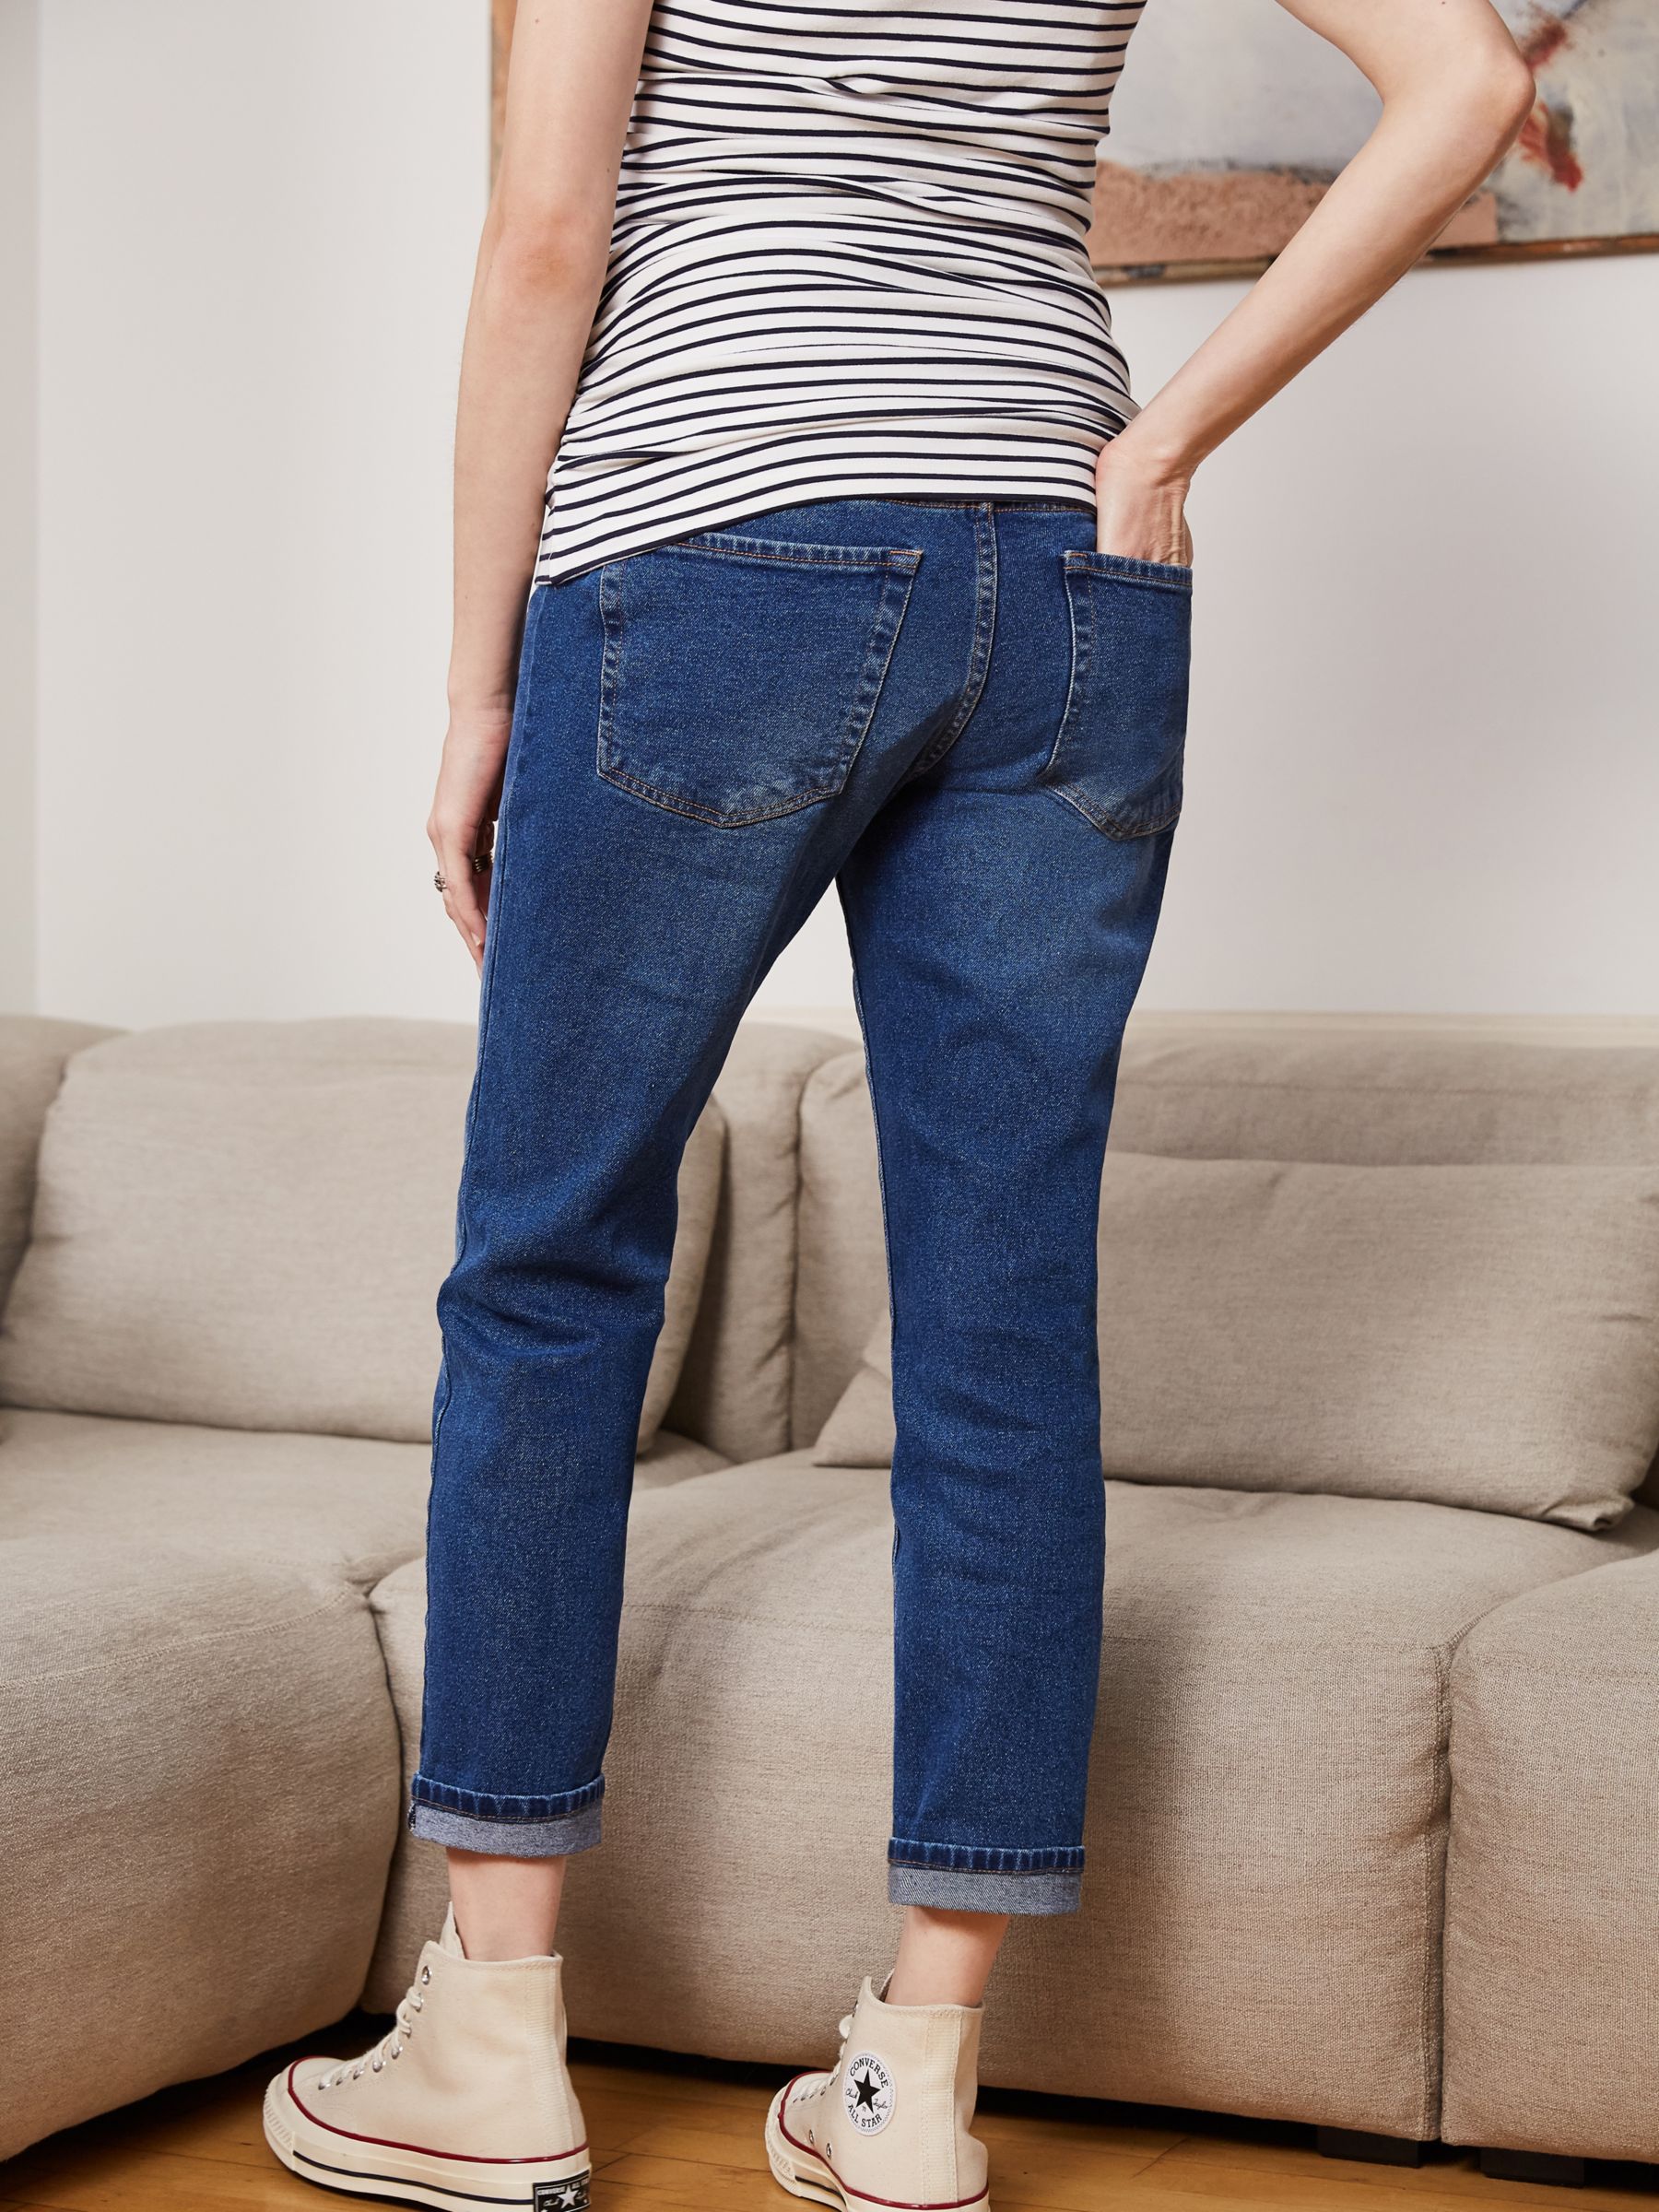 Isabella Oliver Over Bump Boyfriend Cut Maternity Jeans, Washed Indigo at  John Lewis & Partners